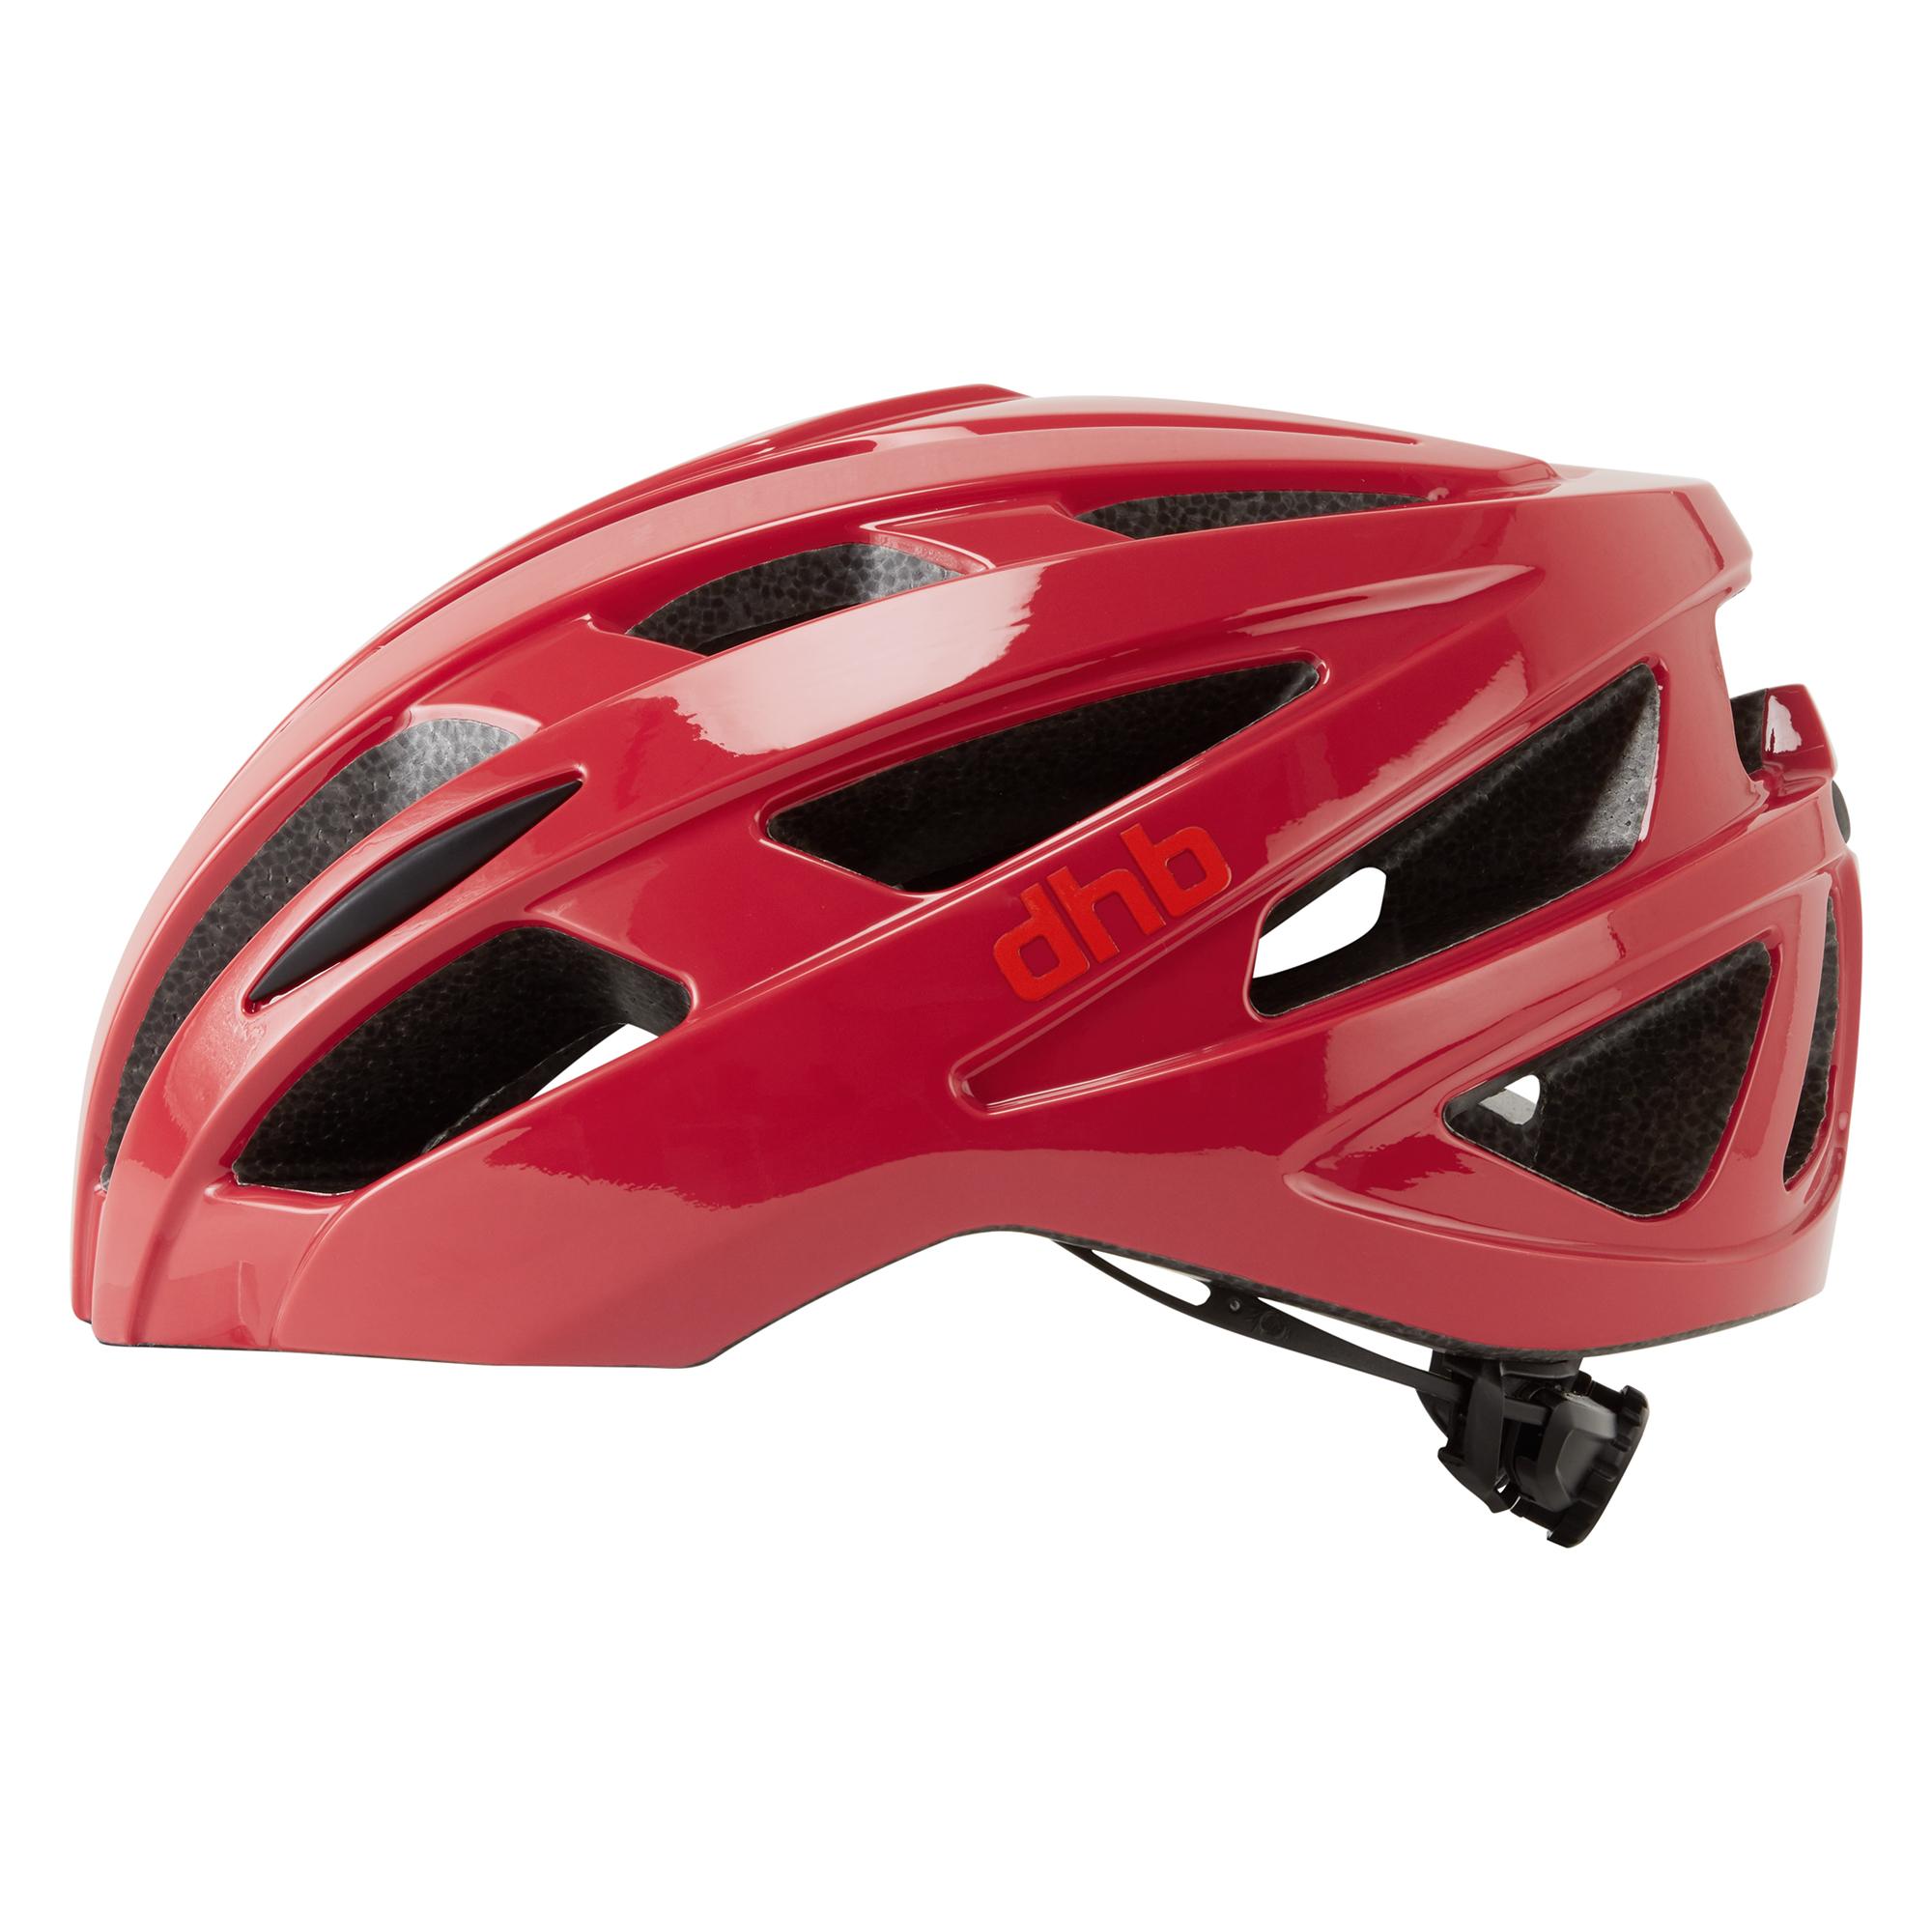 Dhb R2.0 Junior Helmet - Red